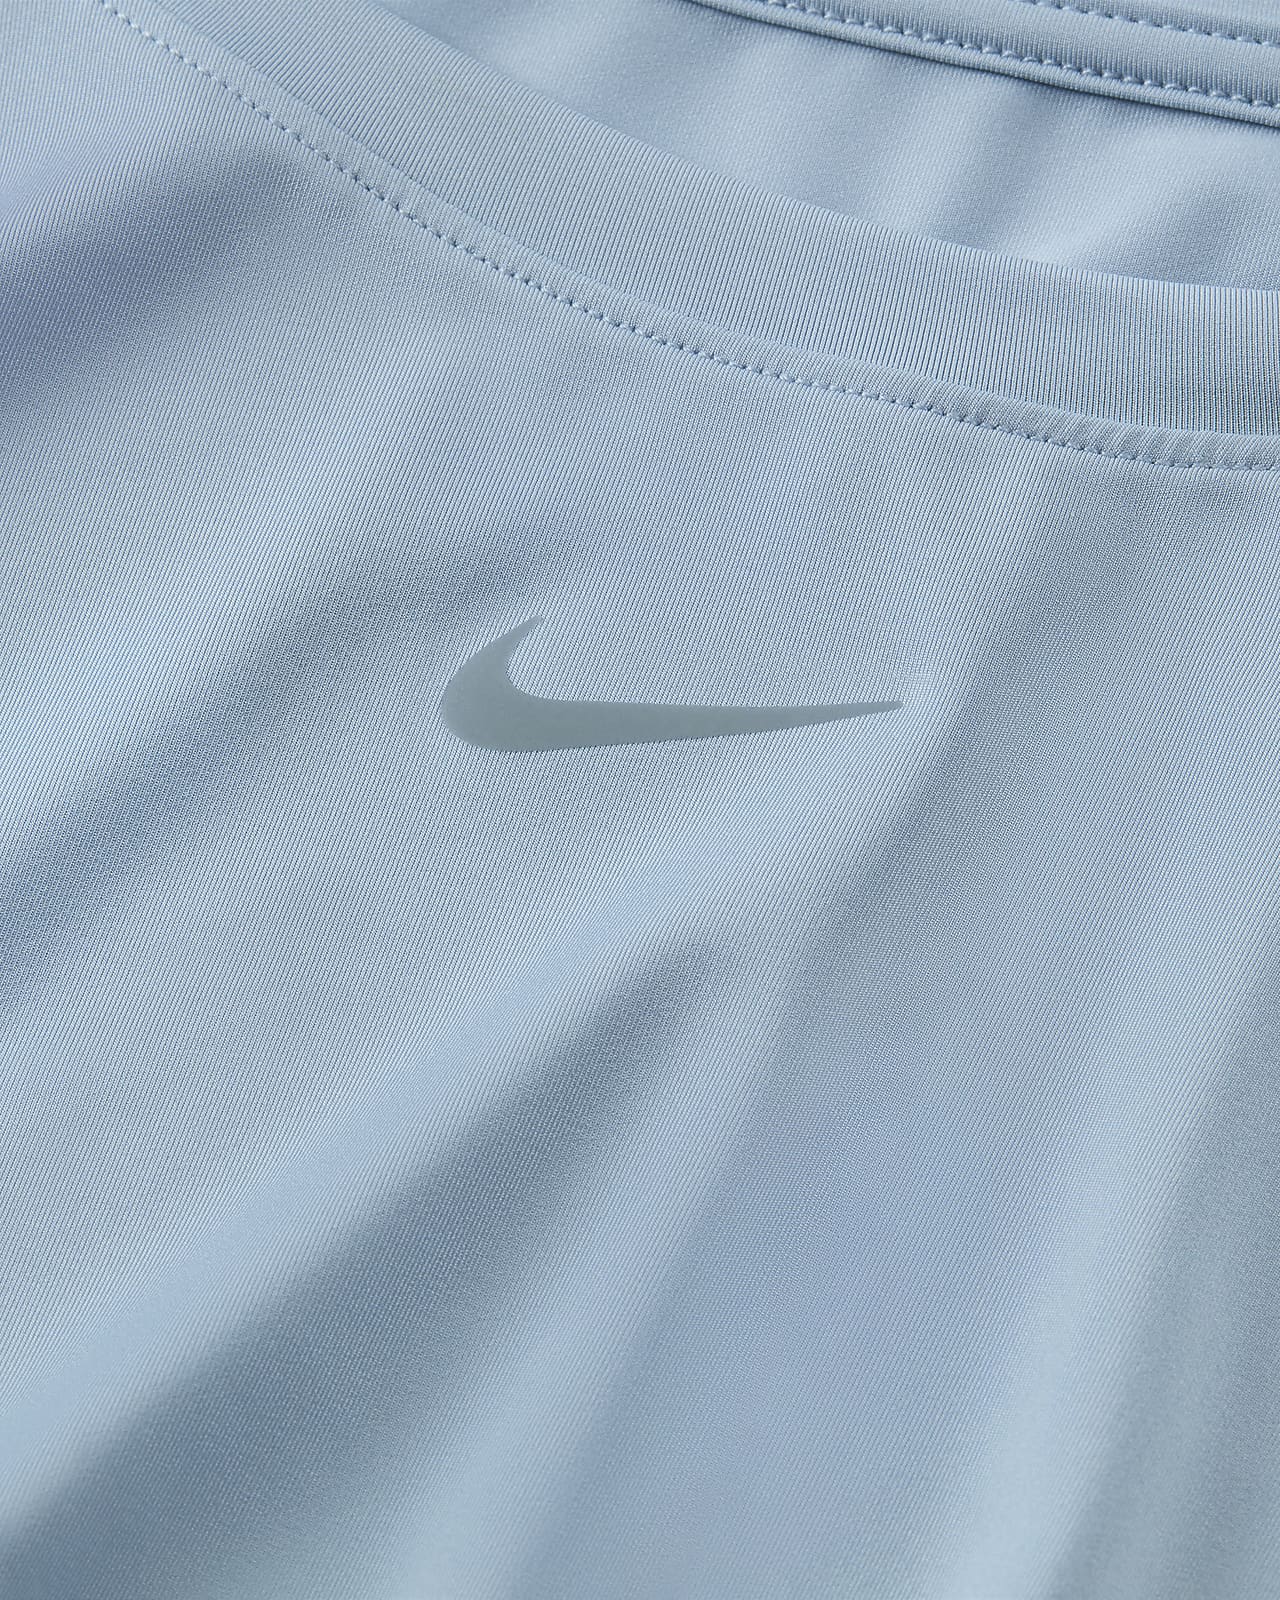 Nike One Classic Women's Dri-FIT Long-Sleeve Top